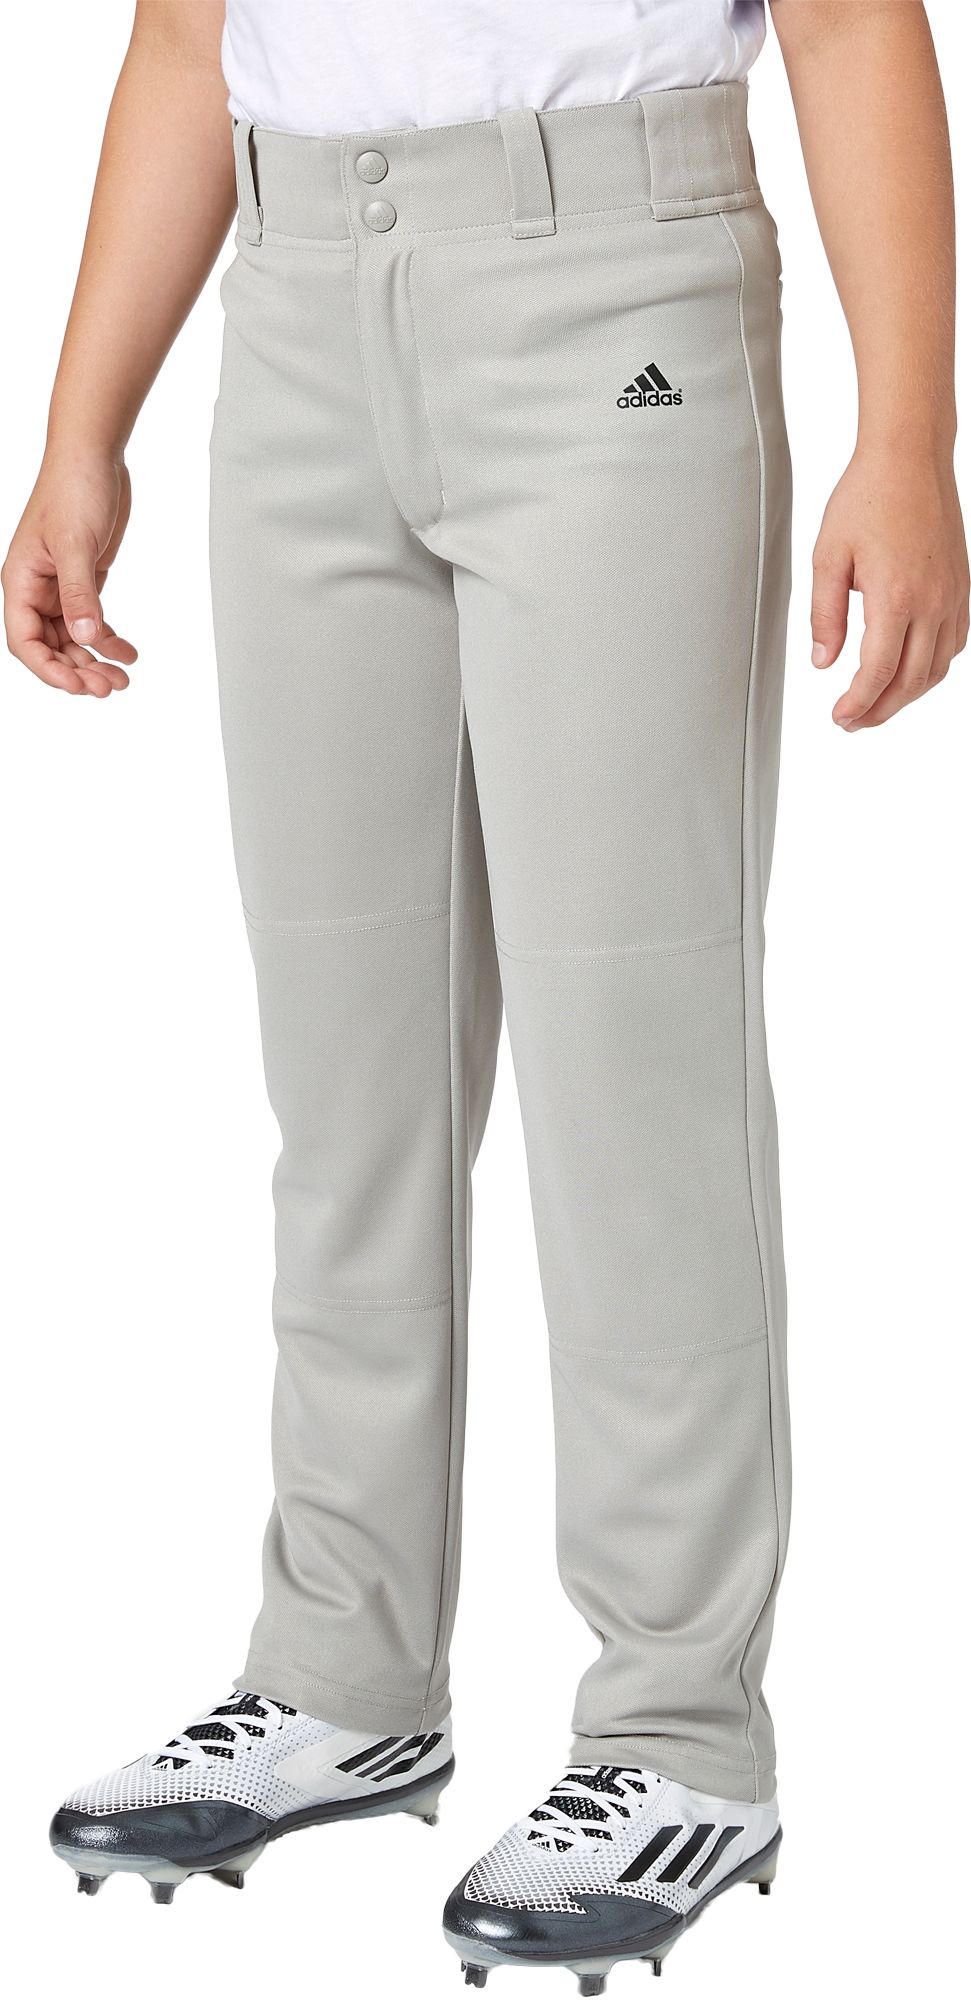 adidas white baseball pants